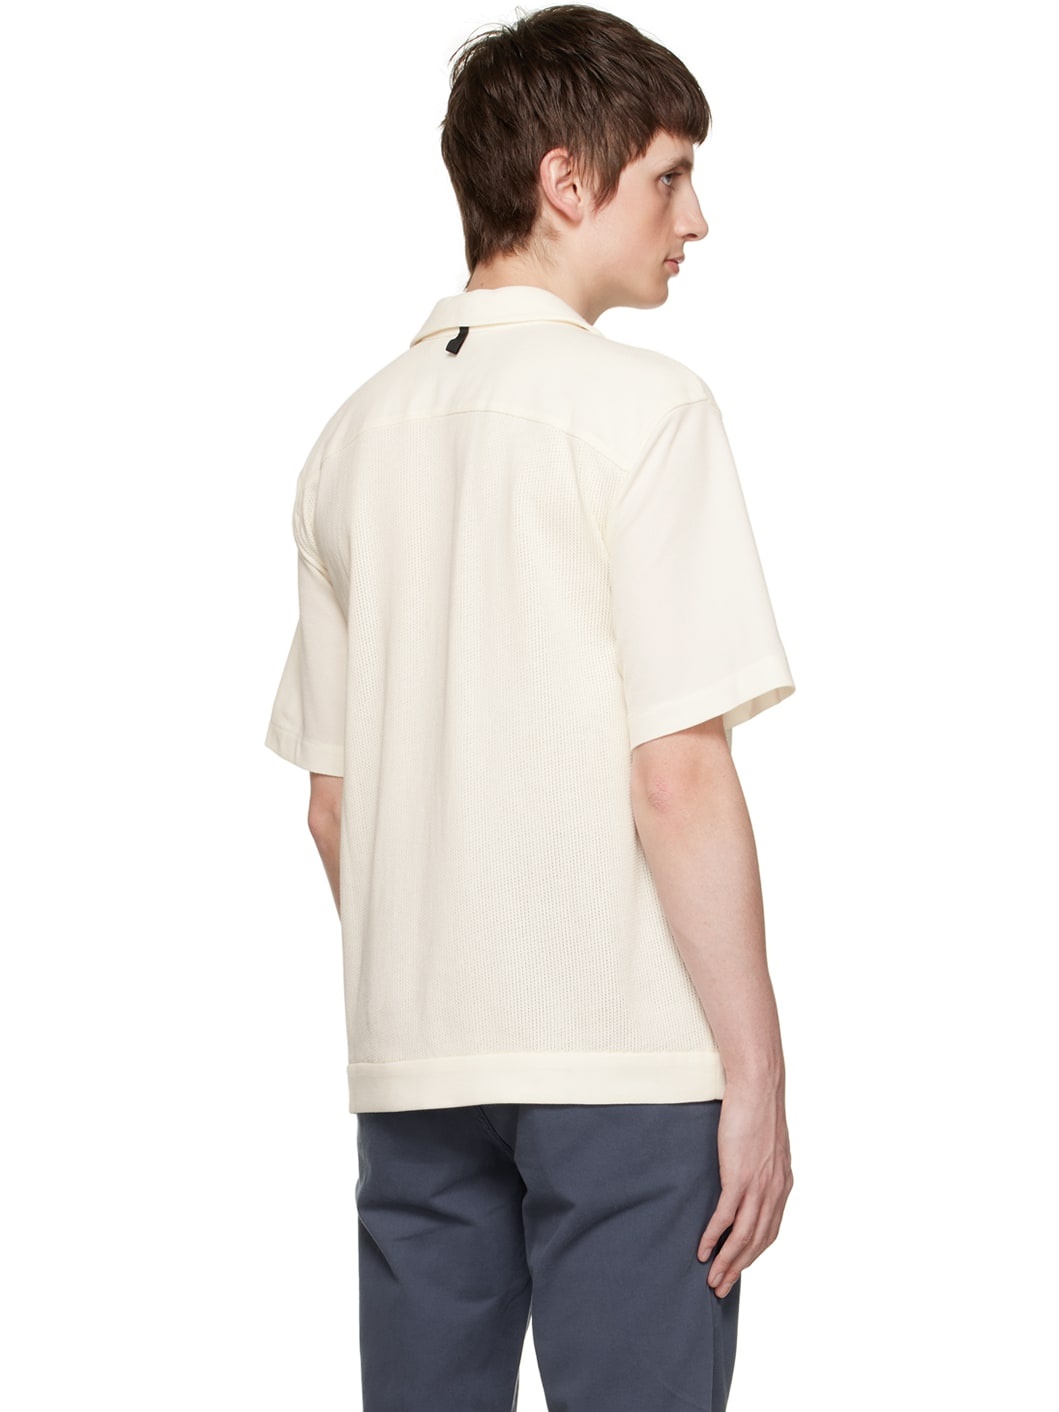 Beige Avery Shirt - 3